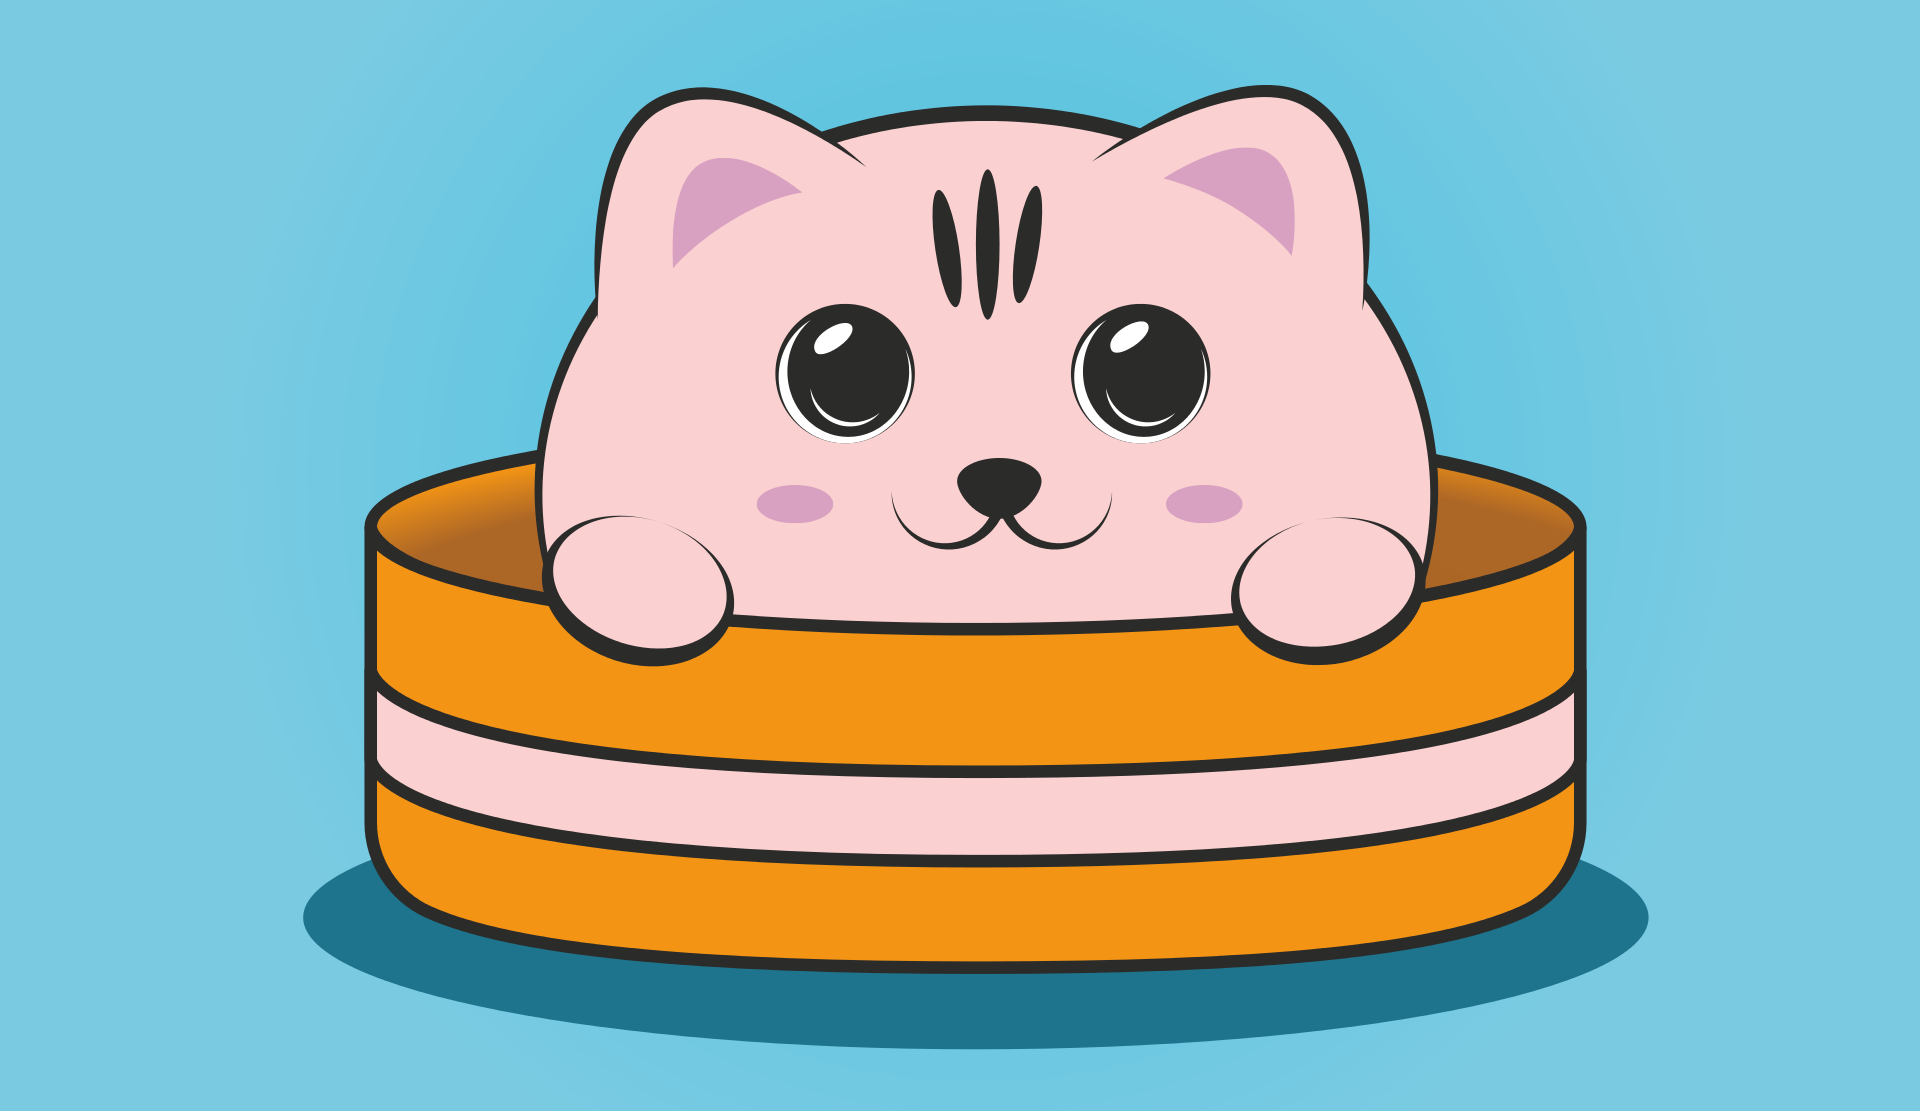 download wallpaper: kitten cartoon wallpaper